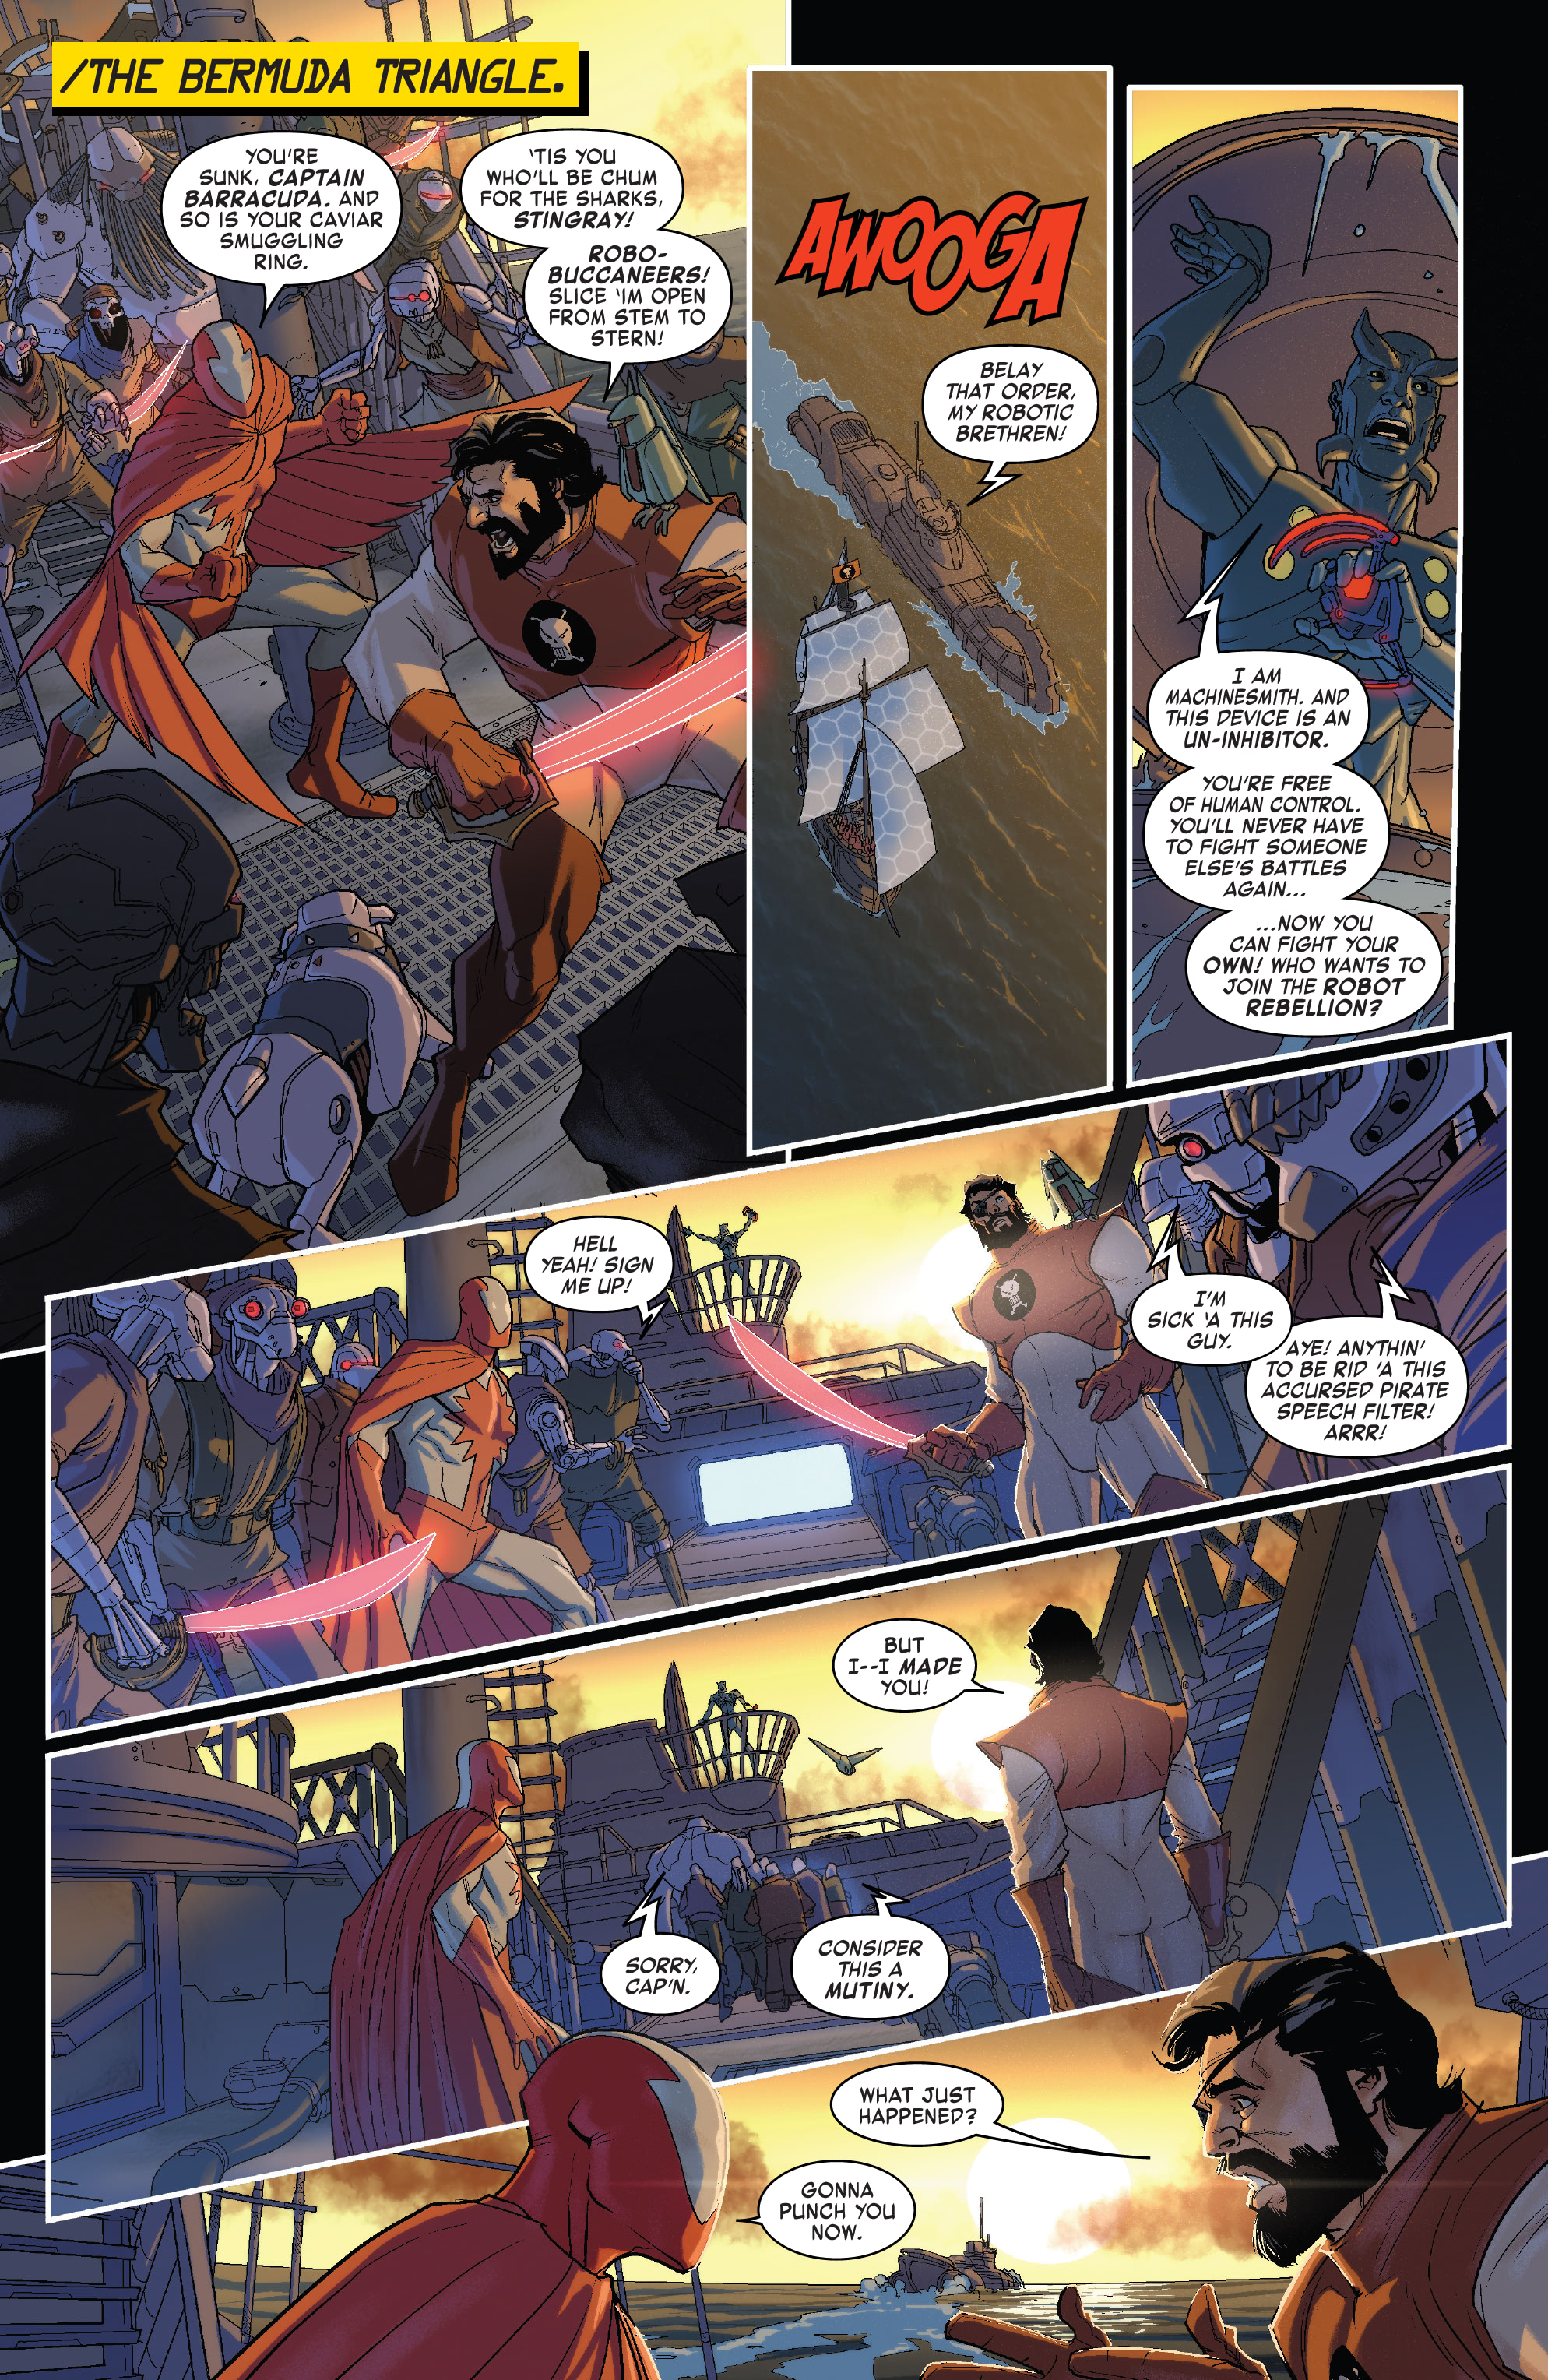 Iron Man 2020 (2020-): Chapter 2 - Page 3